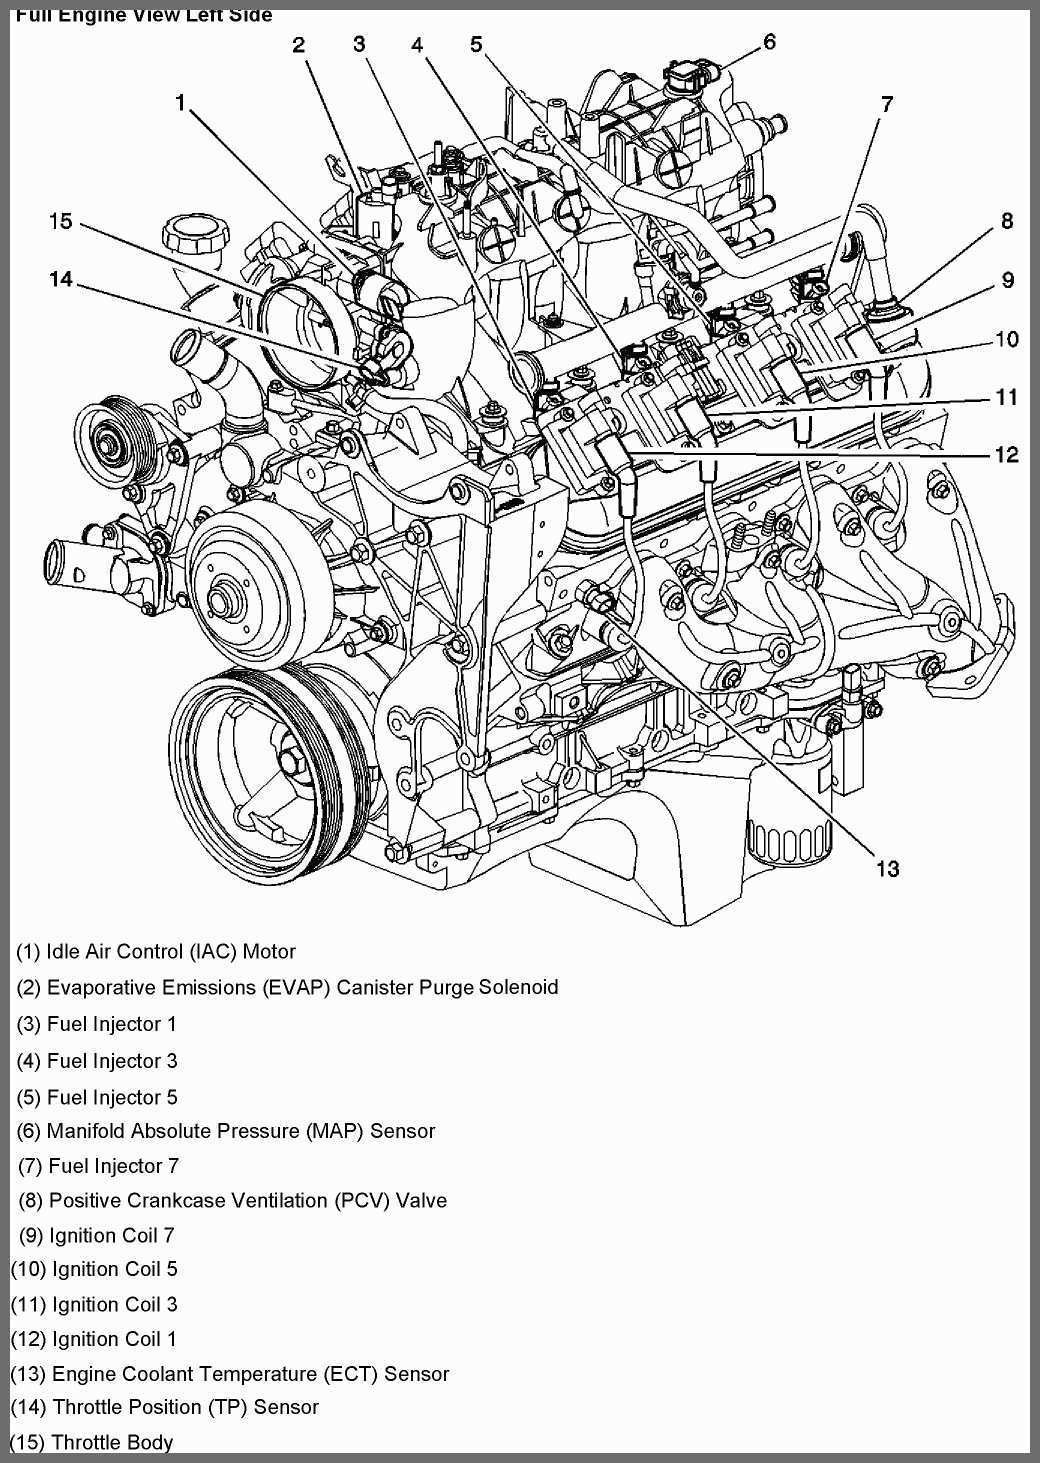 Chevy 4 2 Vortec Engine Diagram Wiring Diagram Part Chevy 4 8 Vortec Engine Diagram